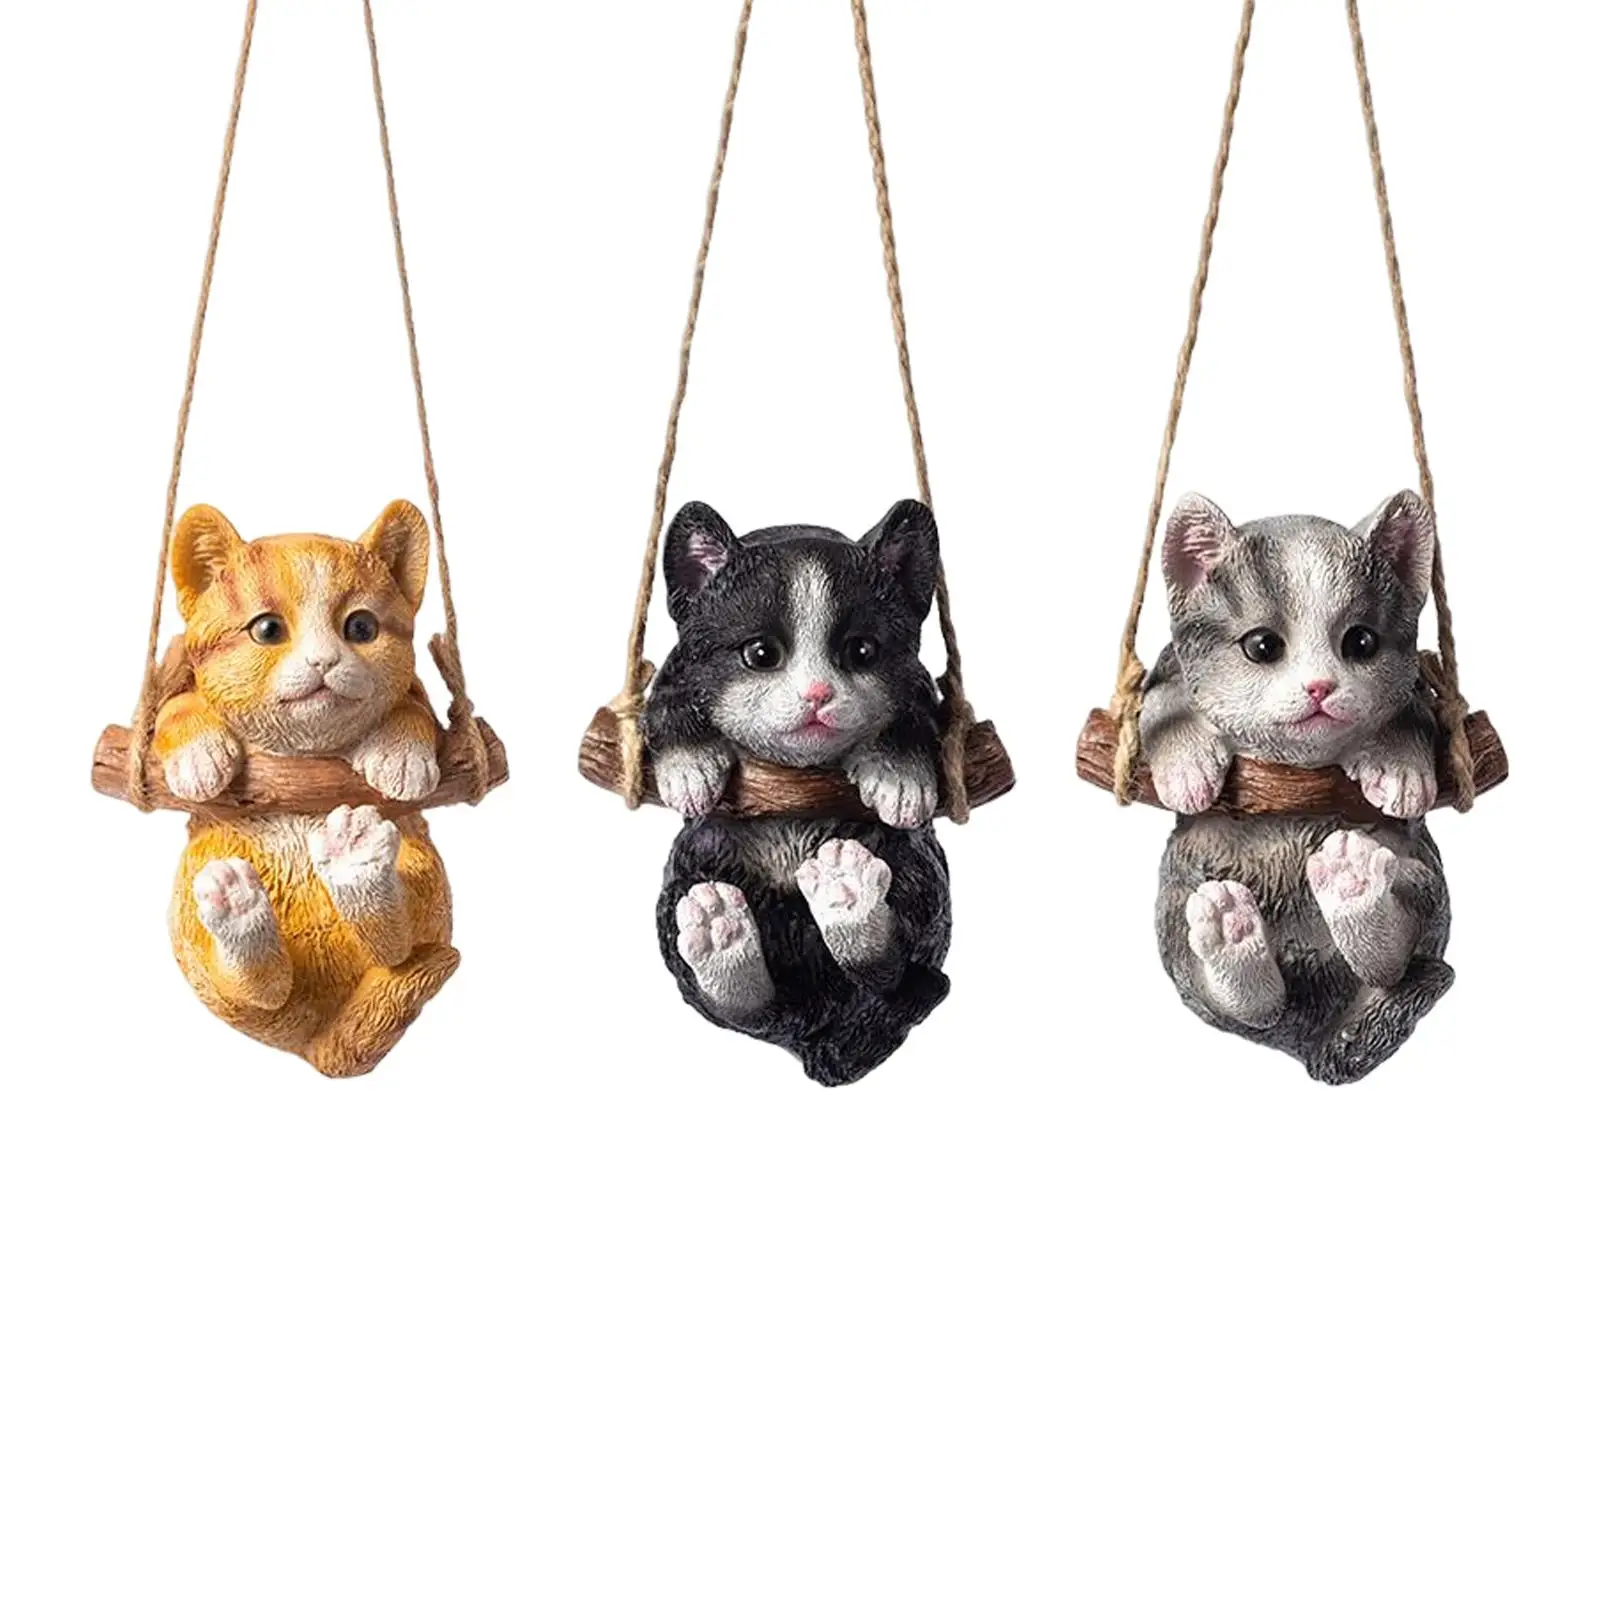 Hanging Swing Cat Statue Garden Animal Figurine Ornament for Office Decor